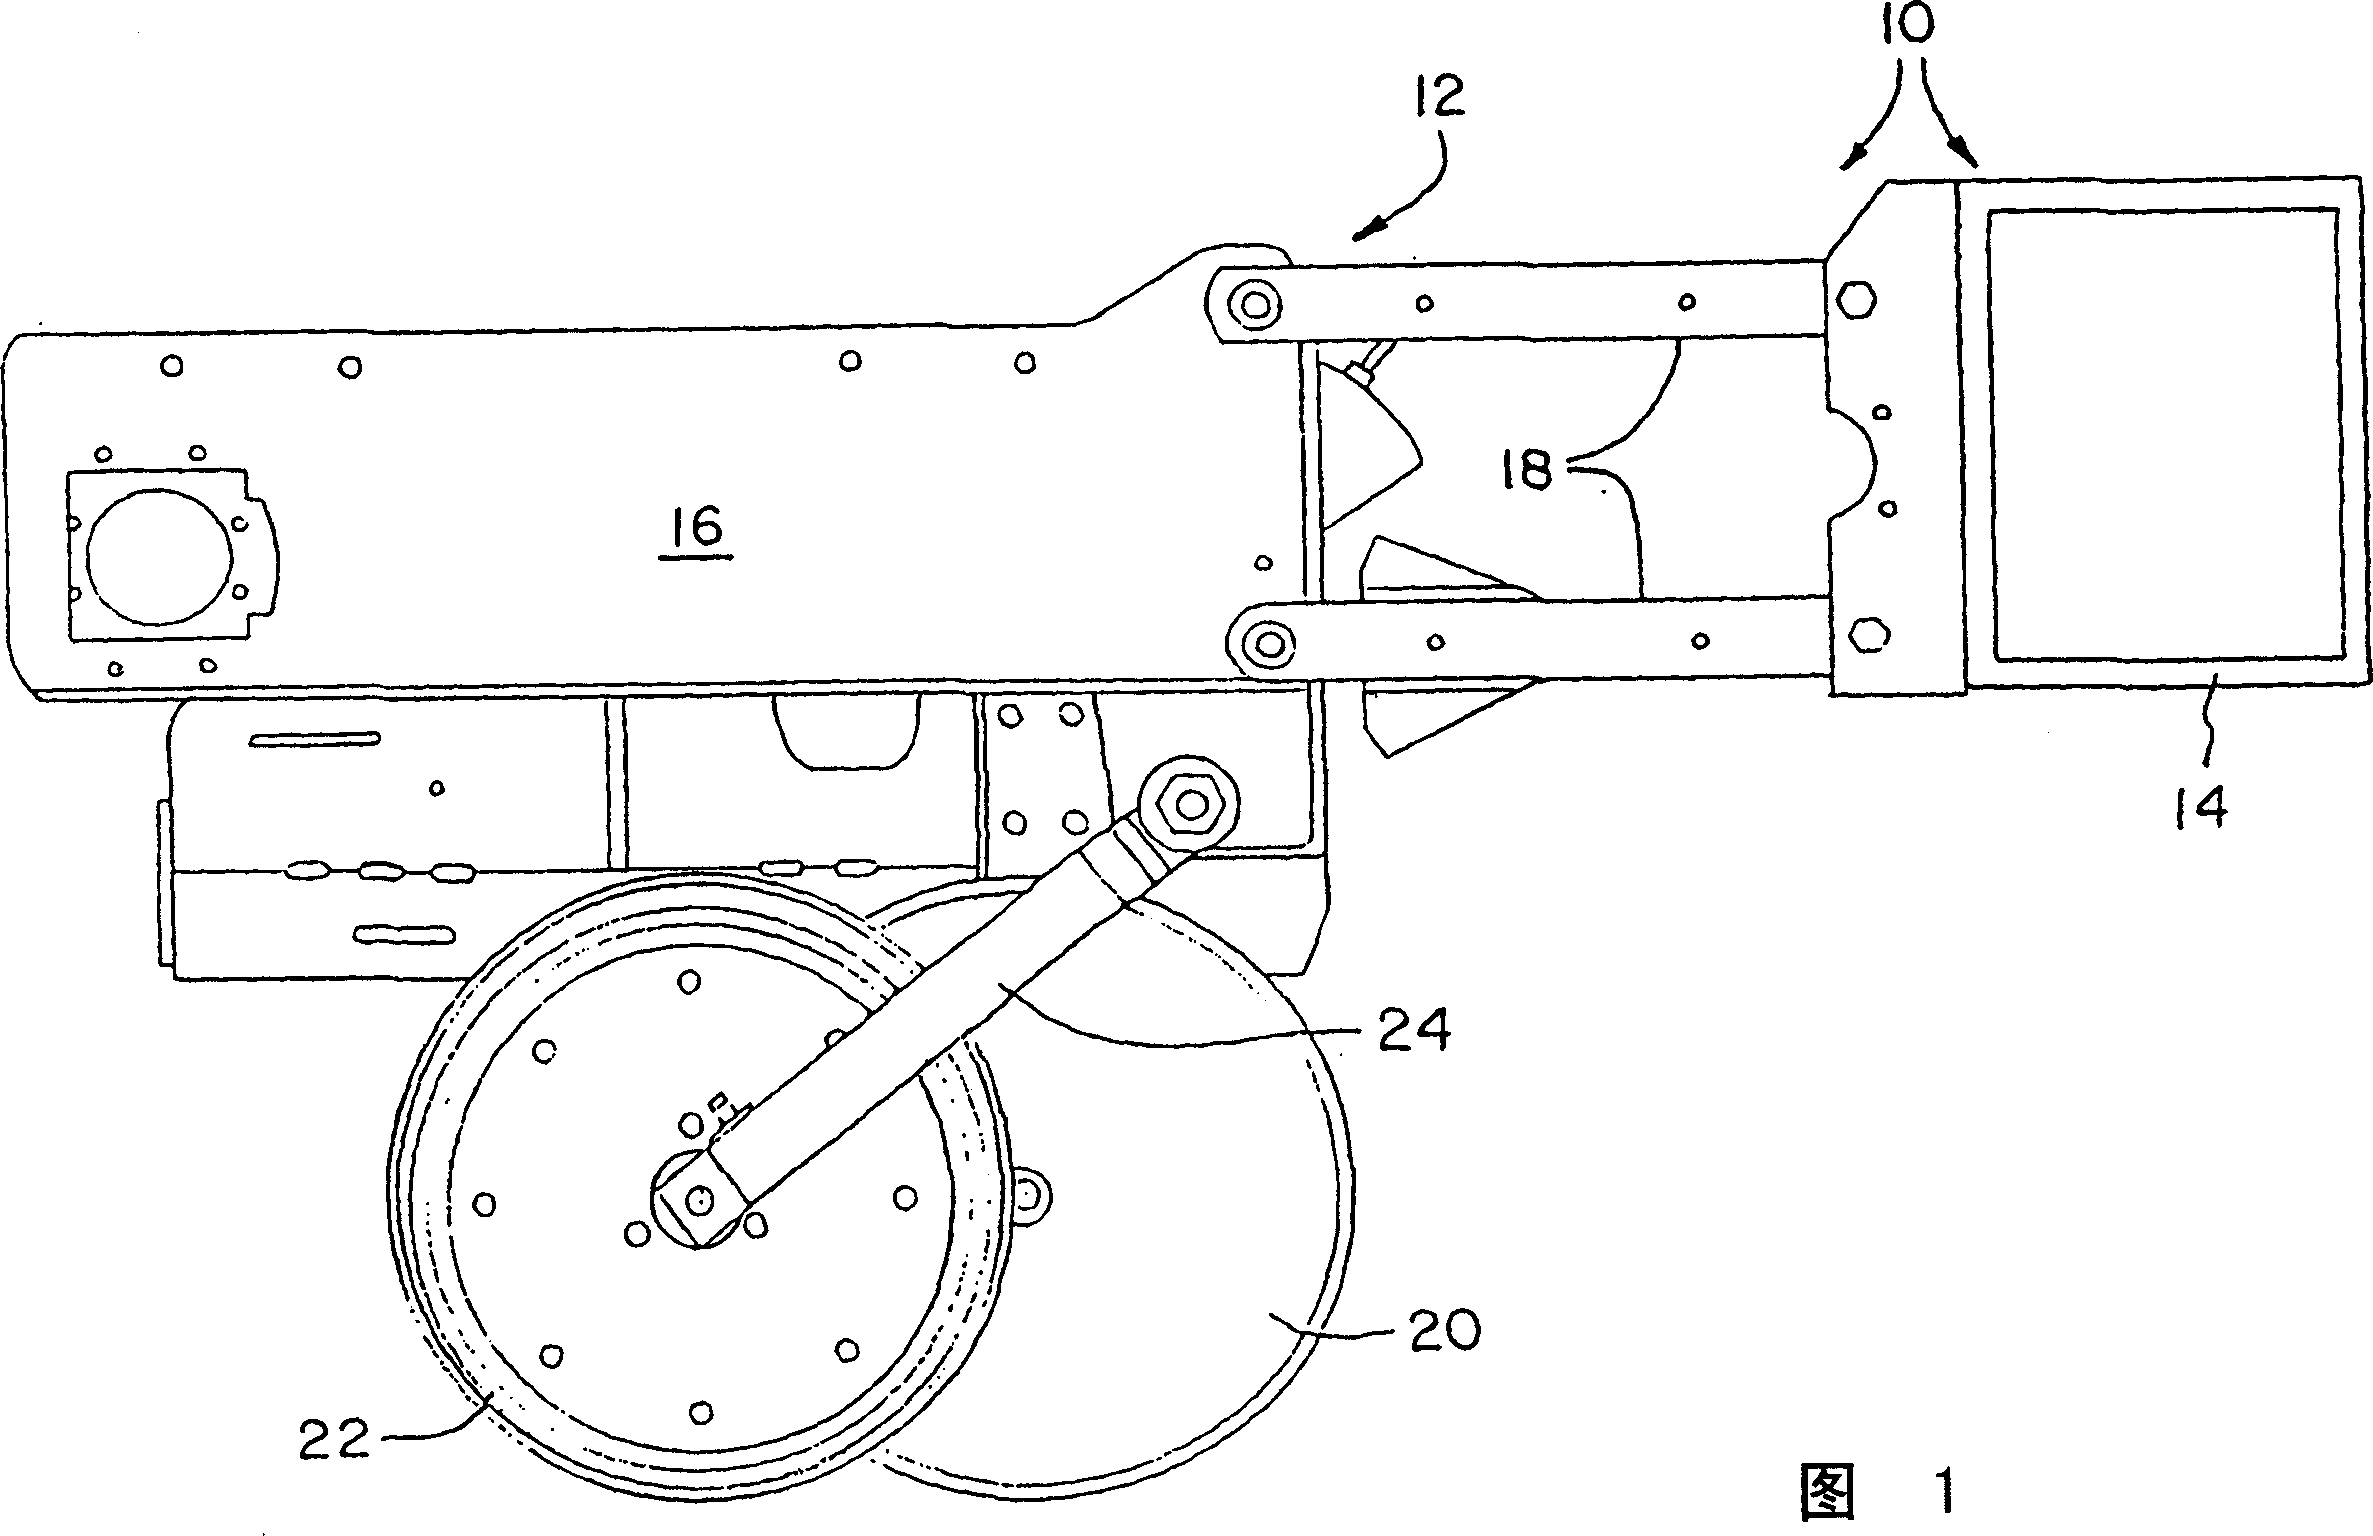 Plough open/close apparatus for agricutural machine